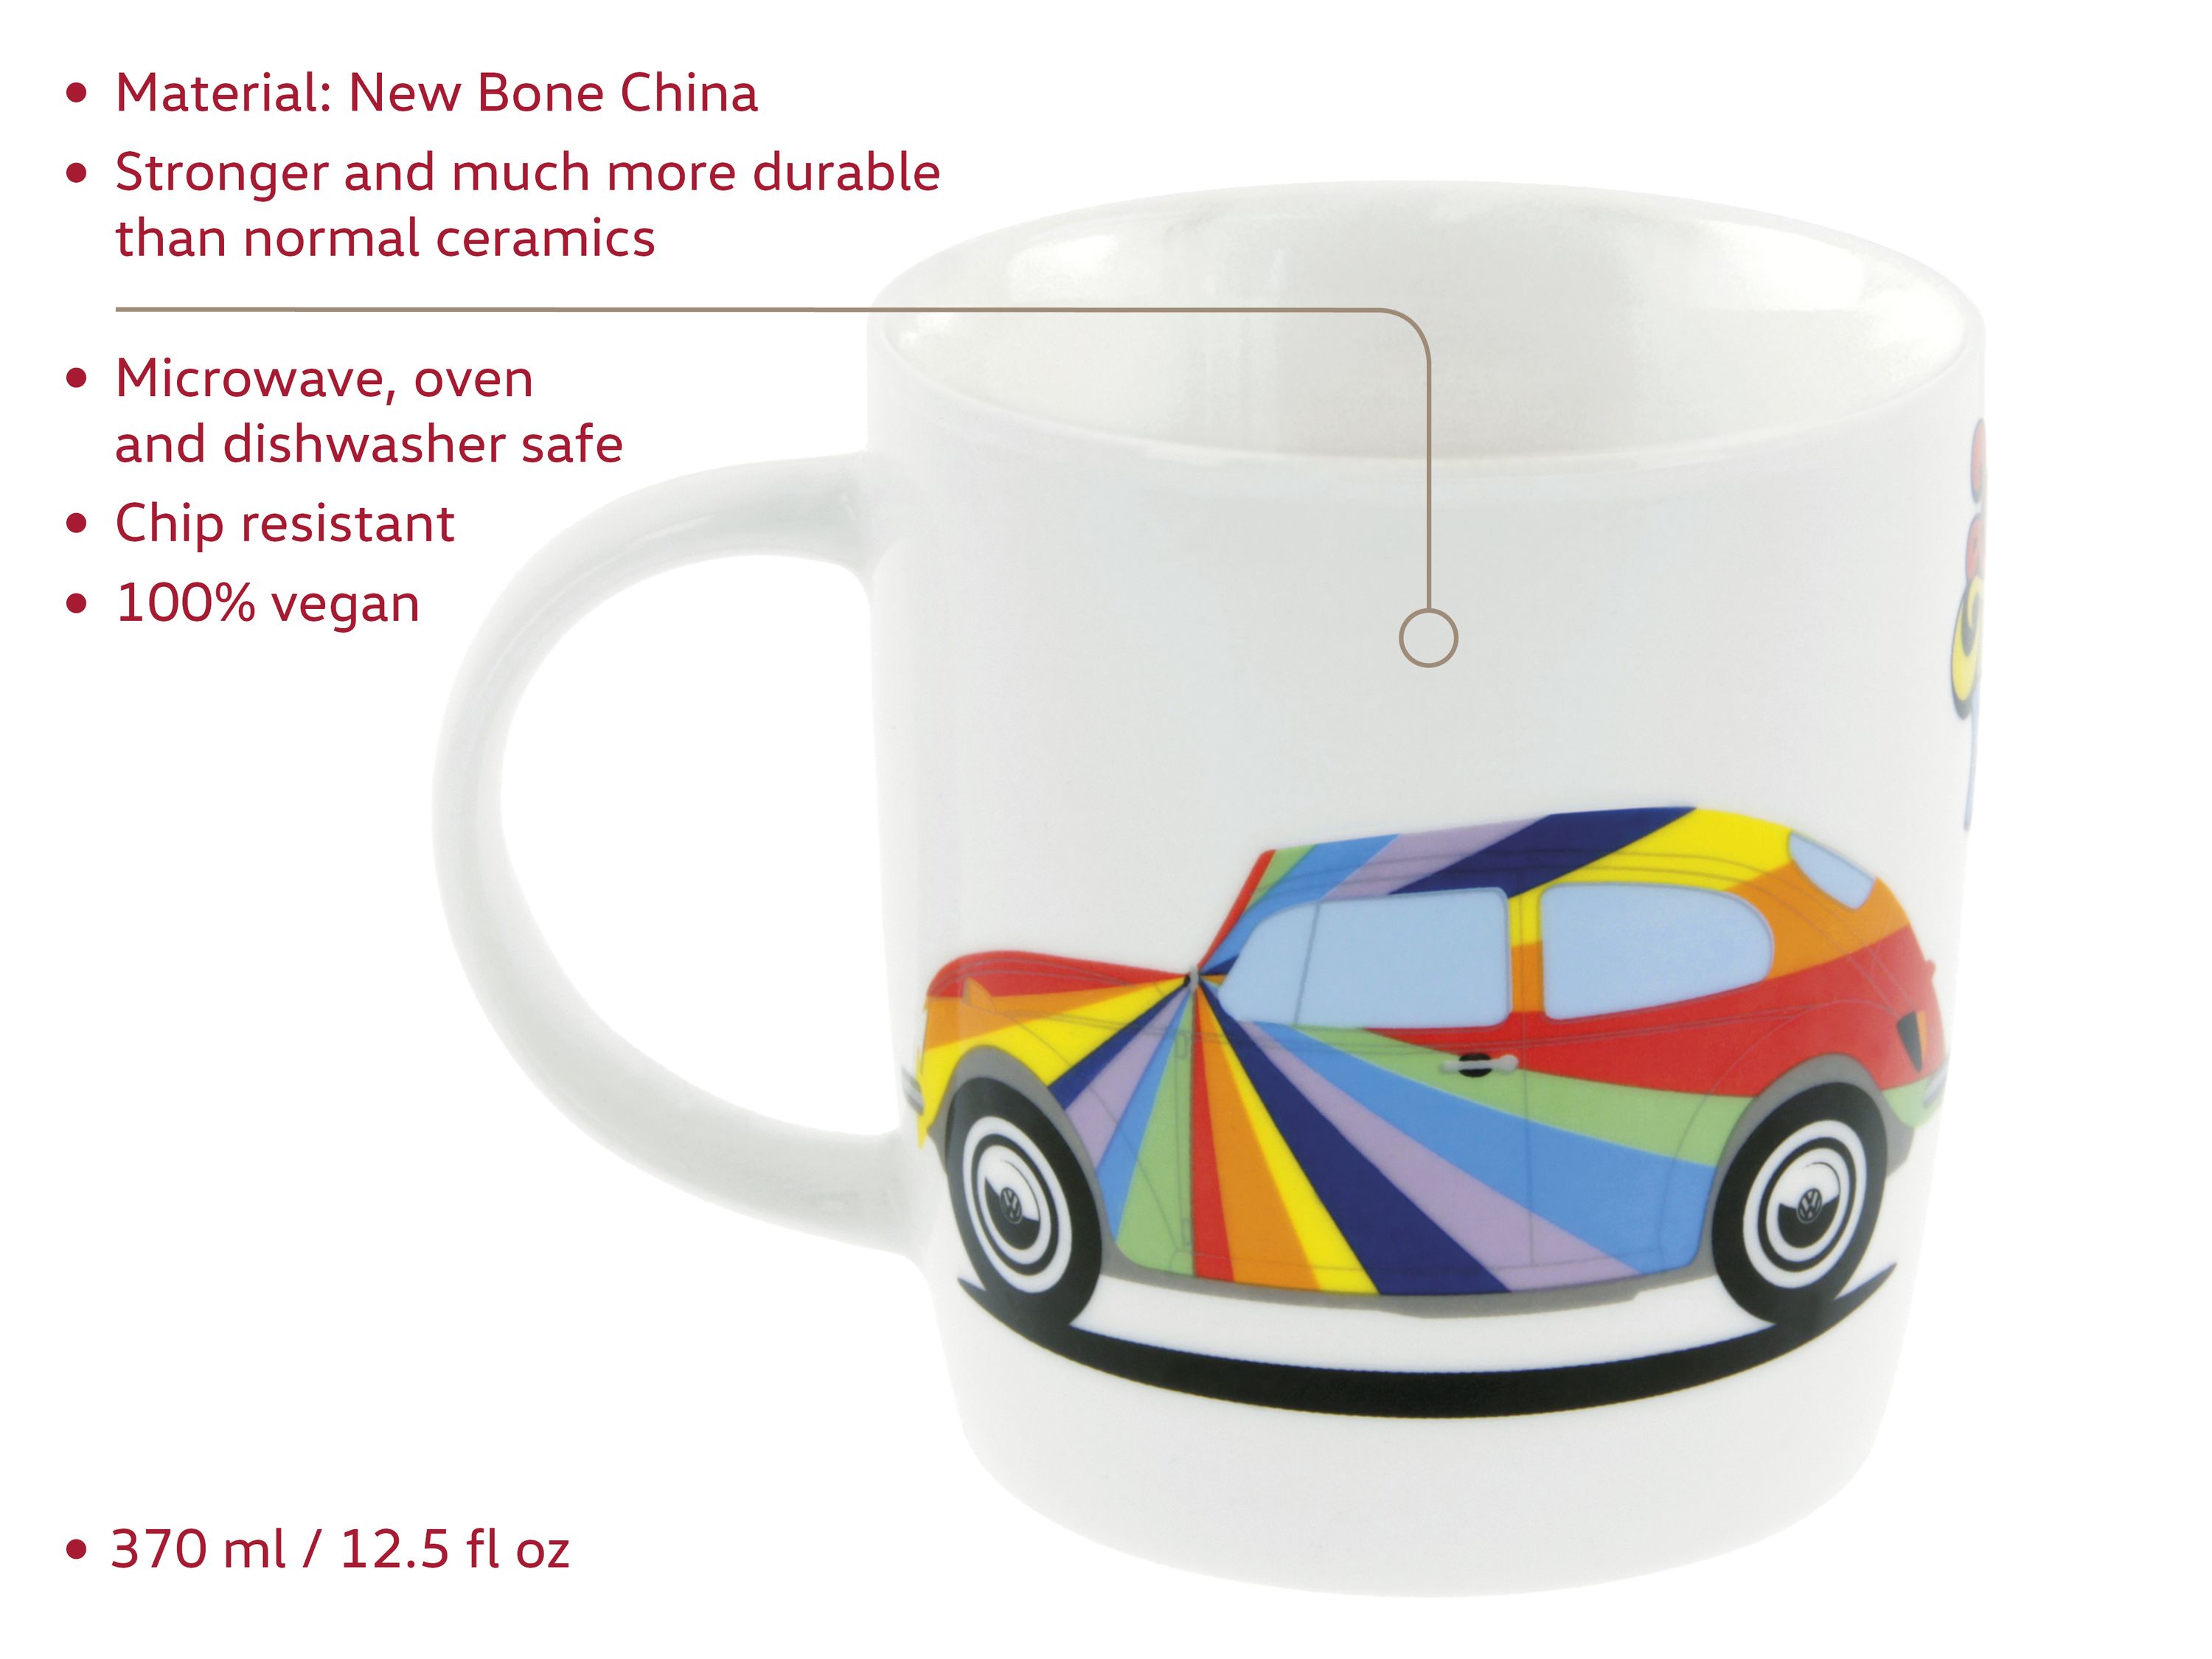 VW Beetle coffee cup 370ml